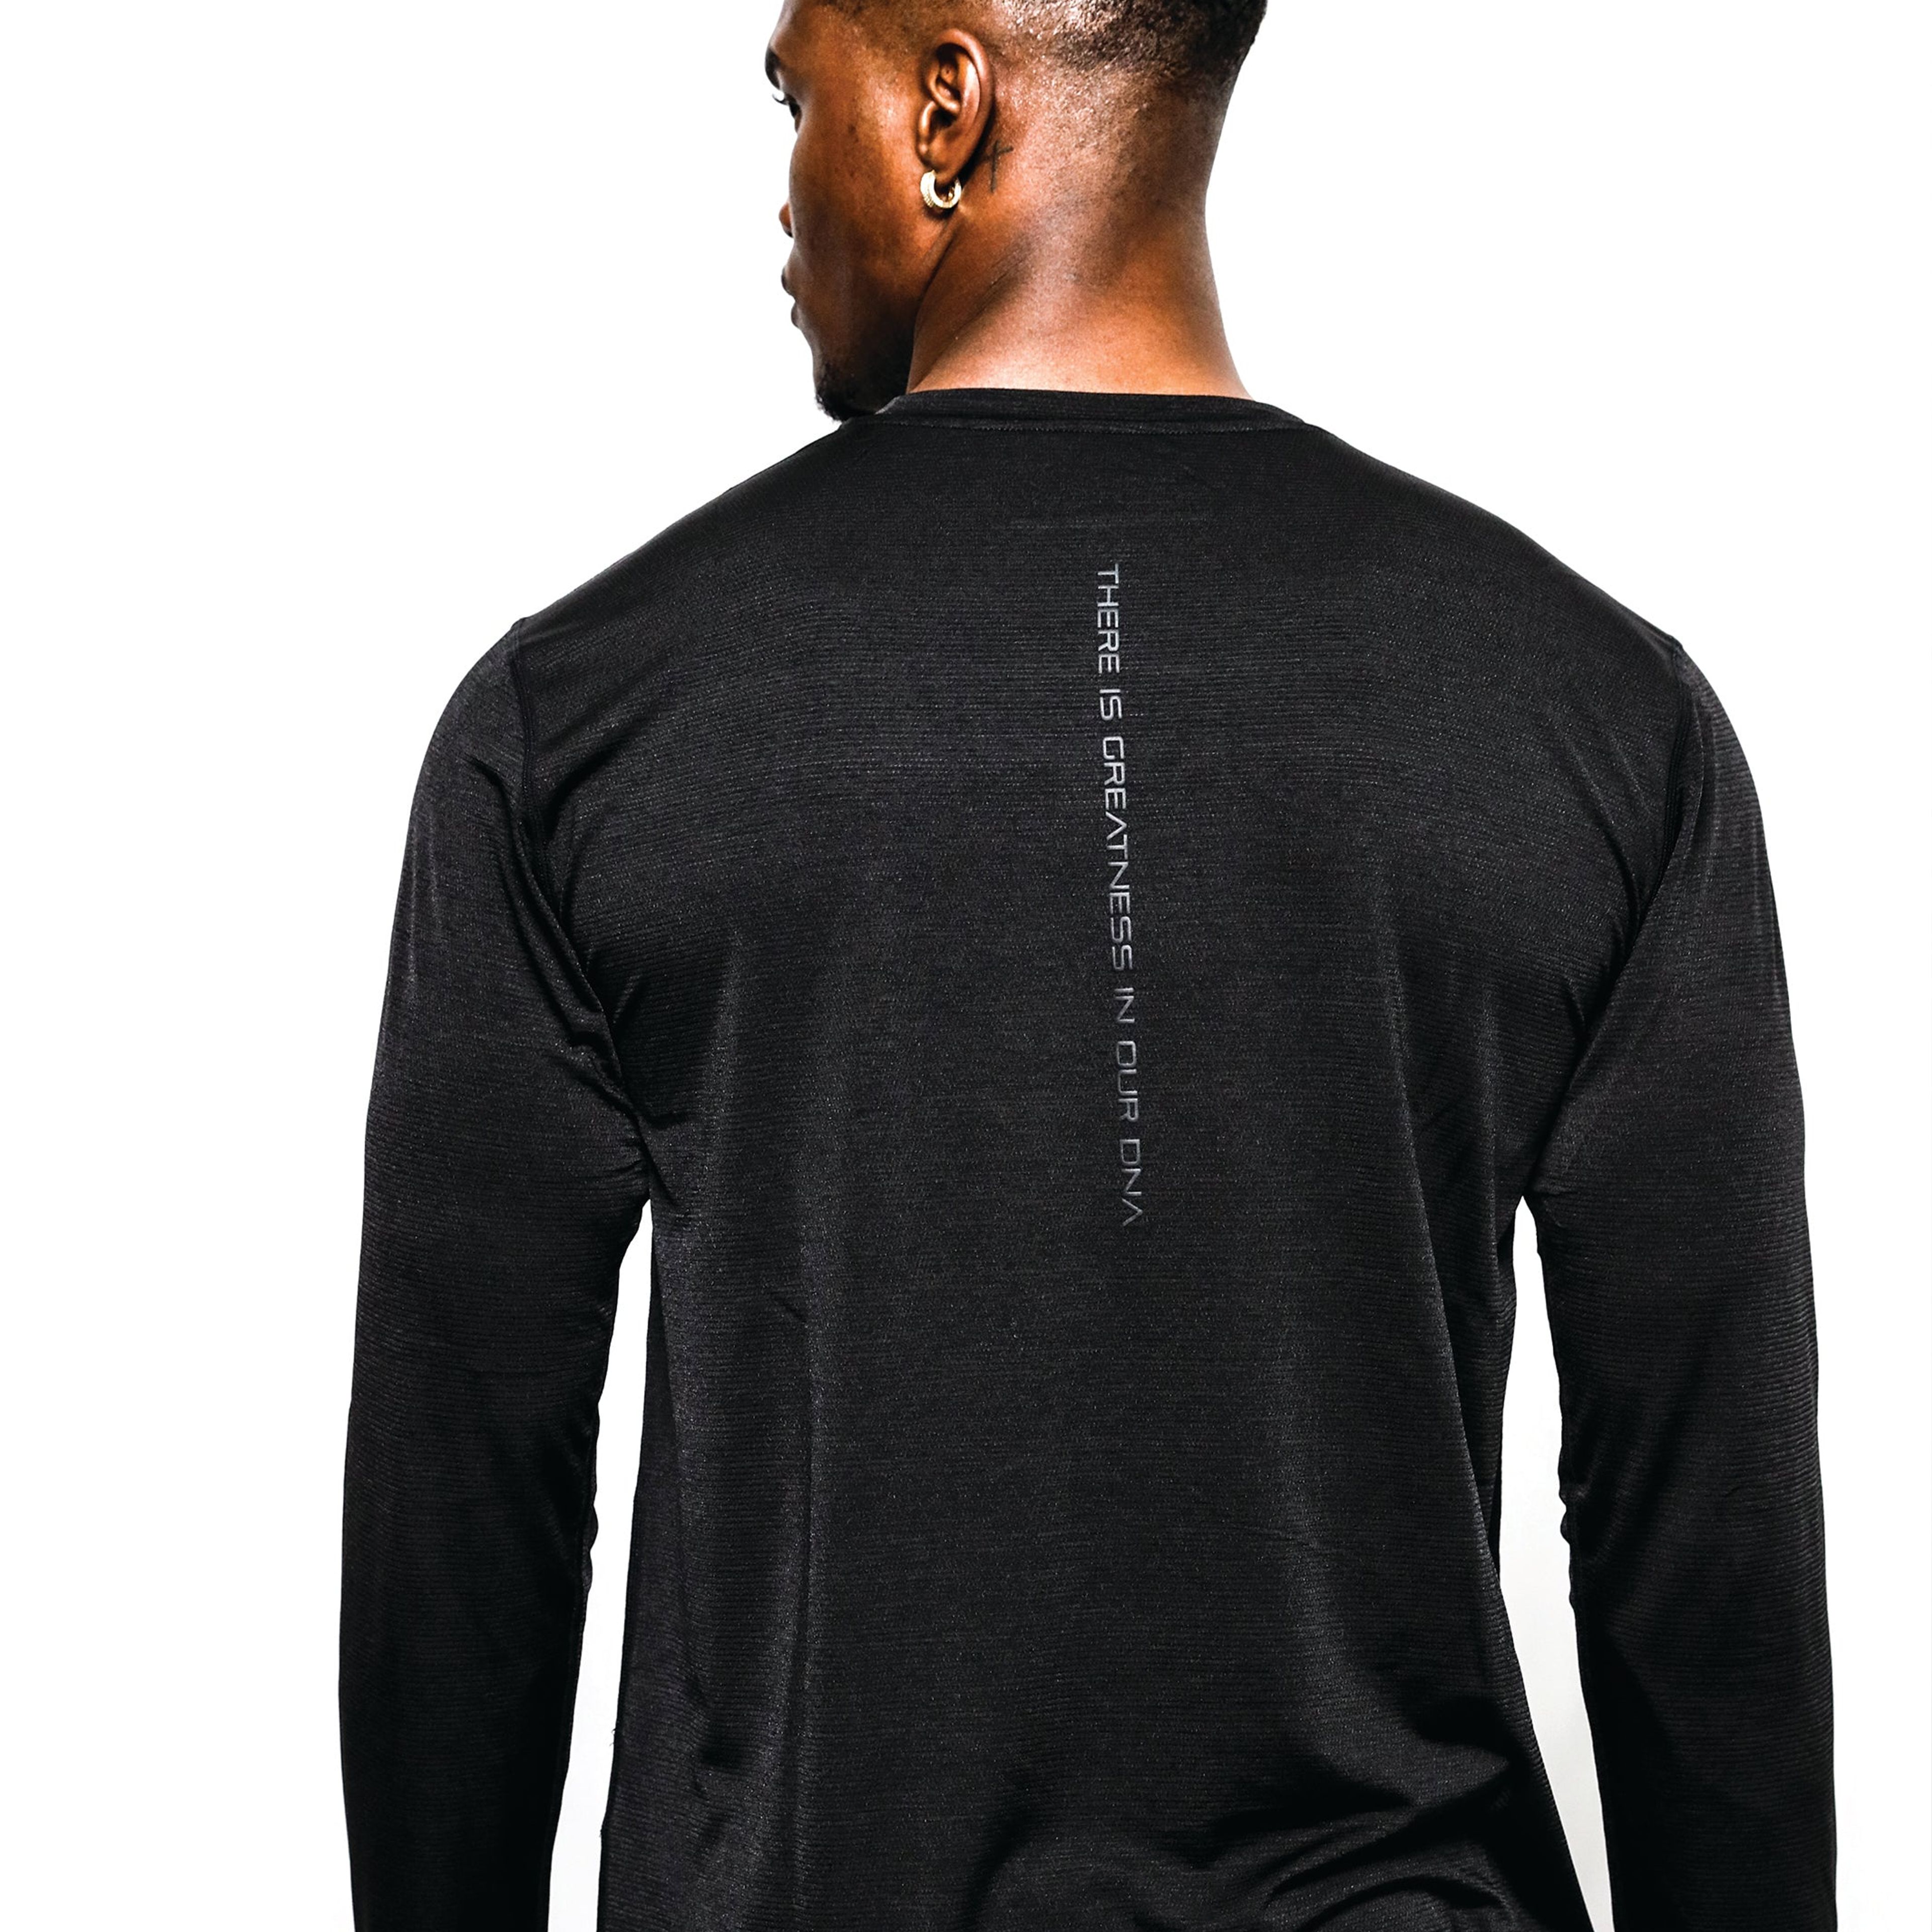 Men's Long Sleeve Puff Print Shirt